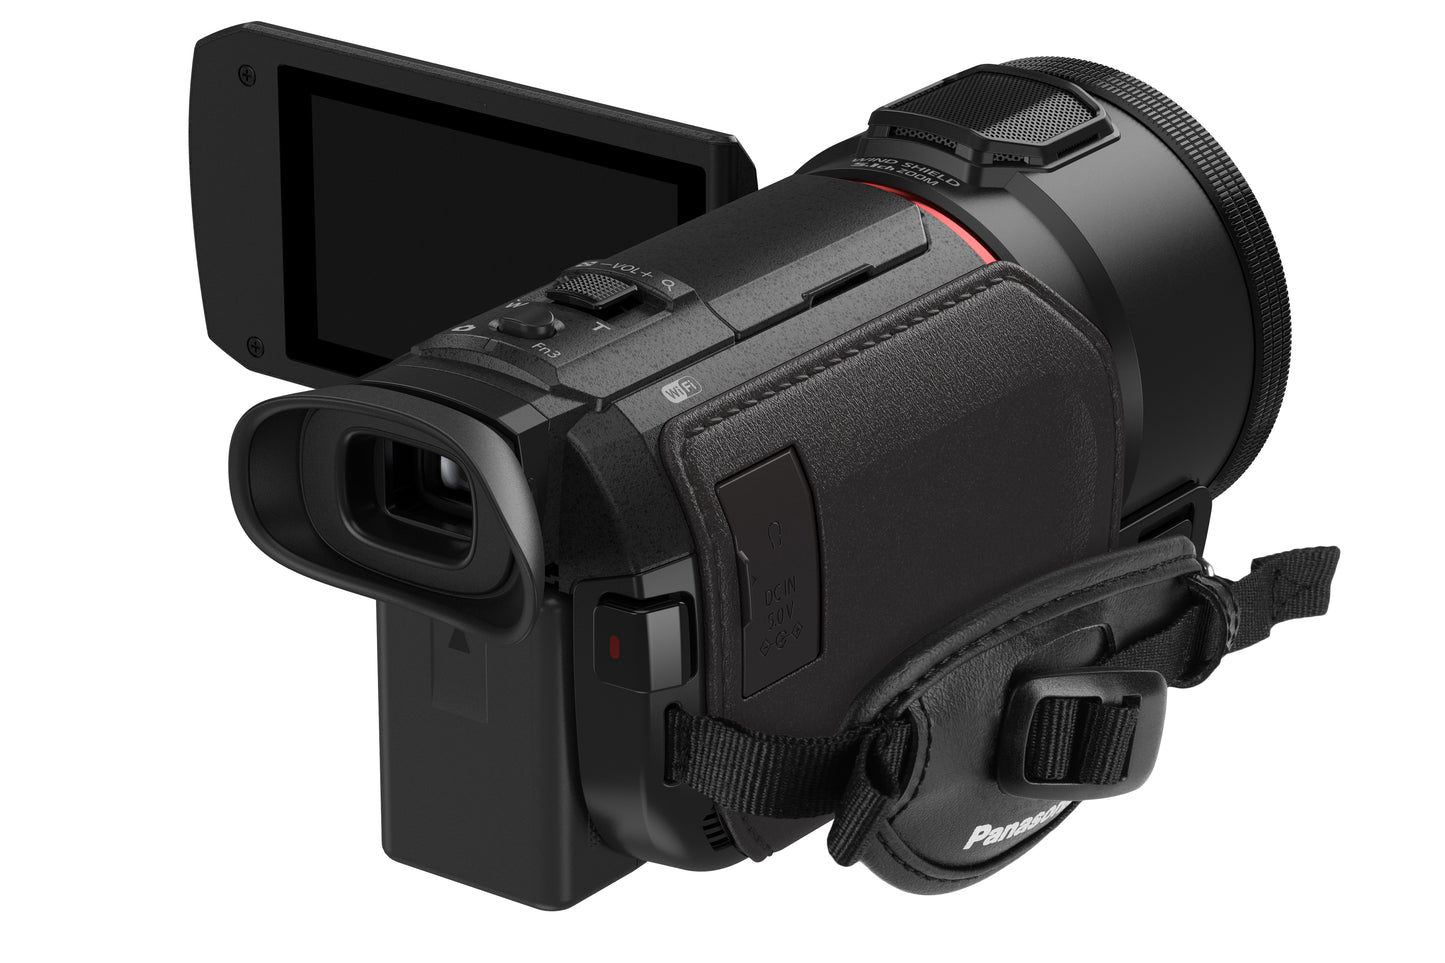 Panasonic HC-VXF1 4K Camcorder with 24x Optical Zoom, 3" LCD, WiFi & SD/SDHC/SDXC Compatibility - Black